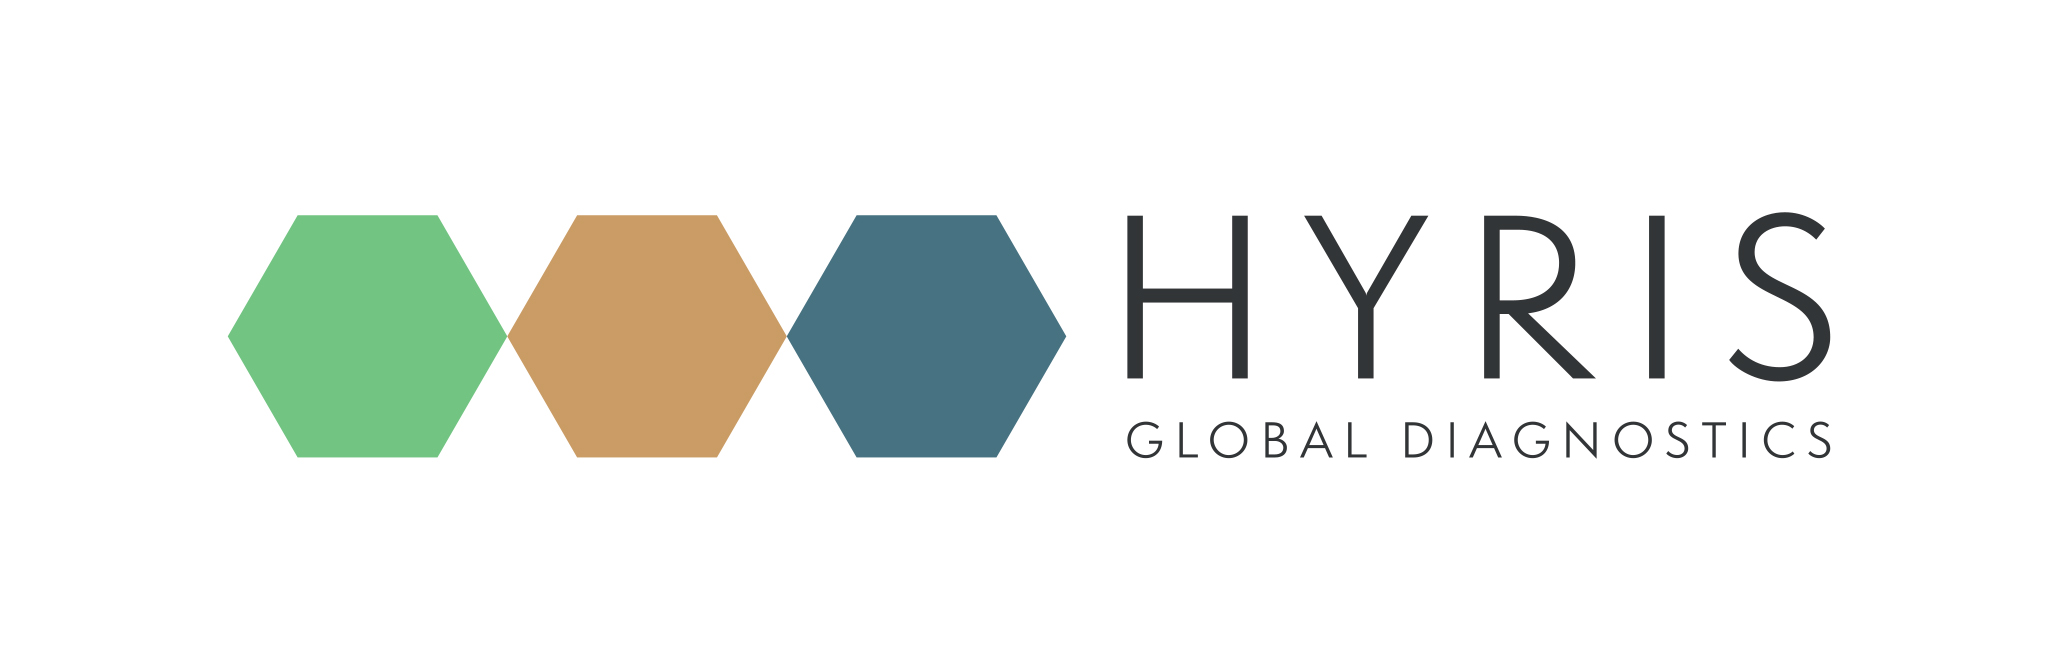 Hyris-Logo-def.jpg